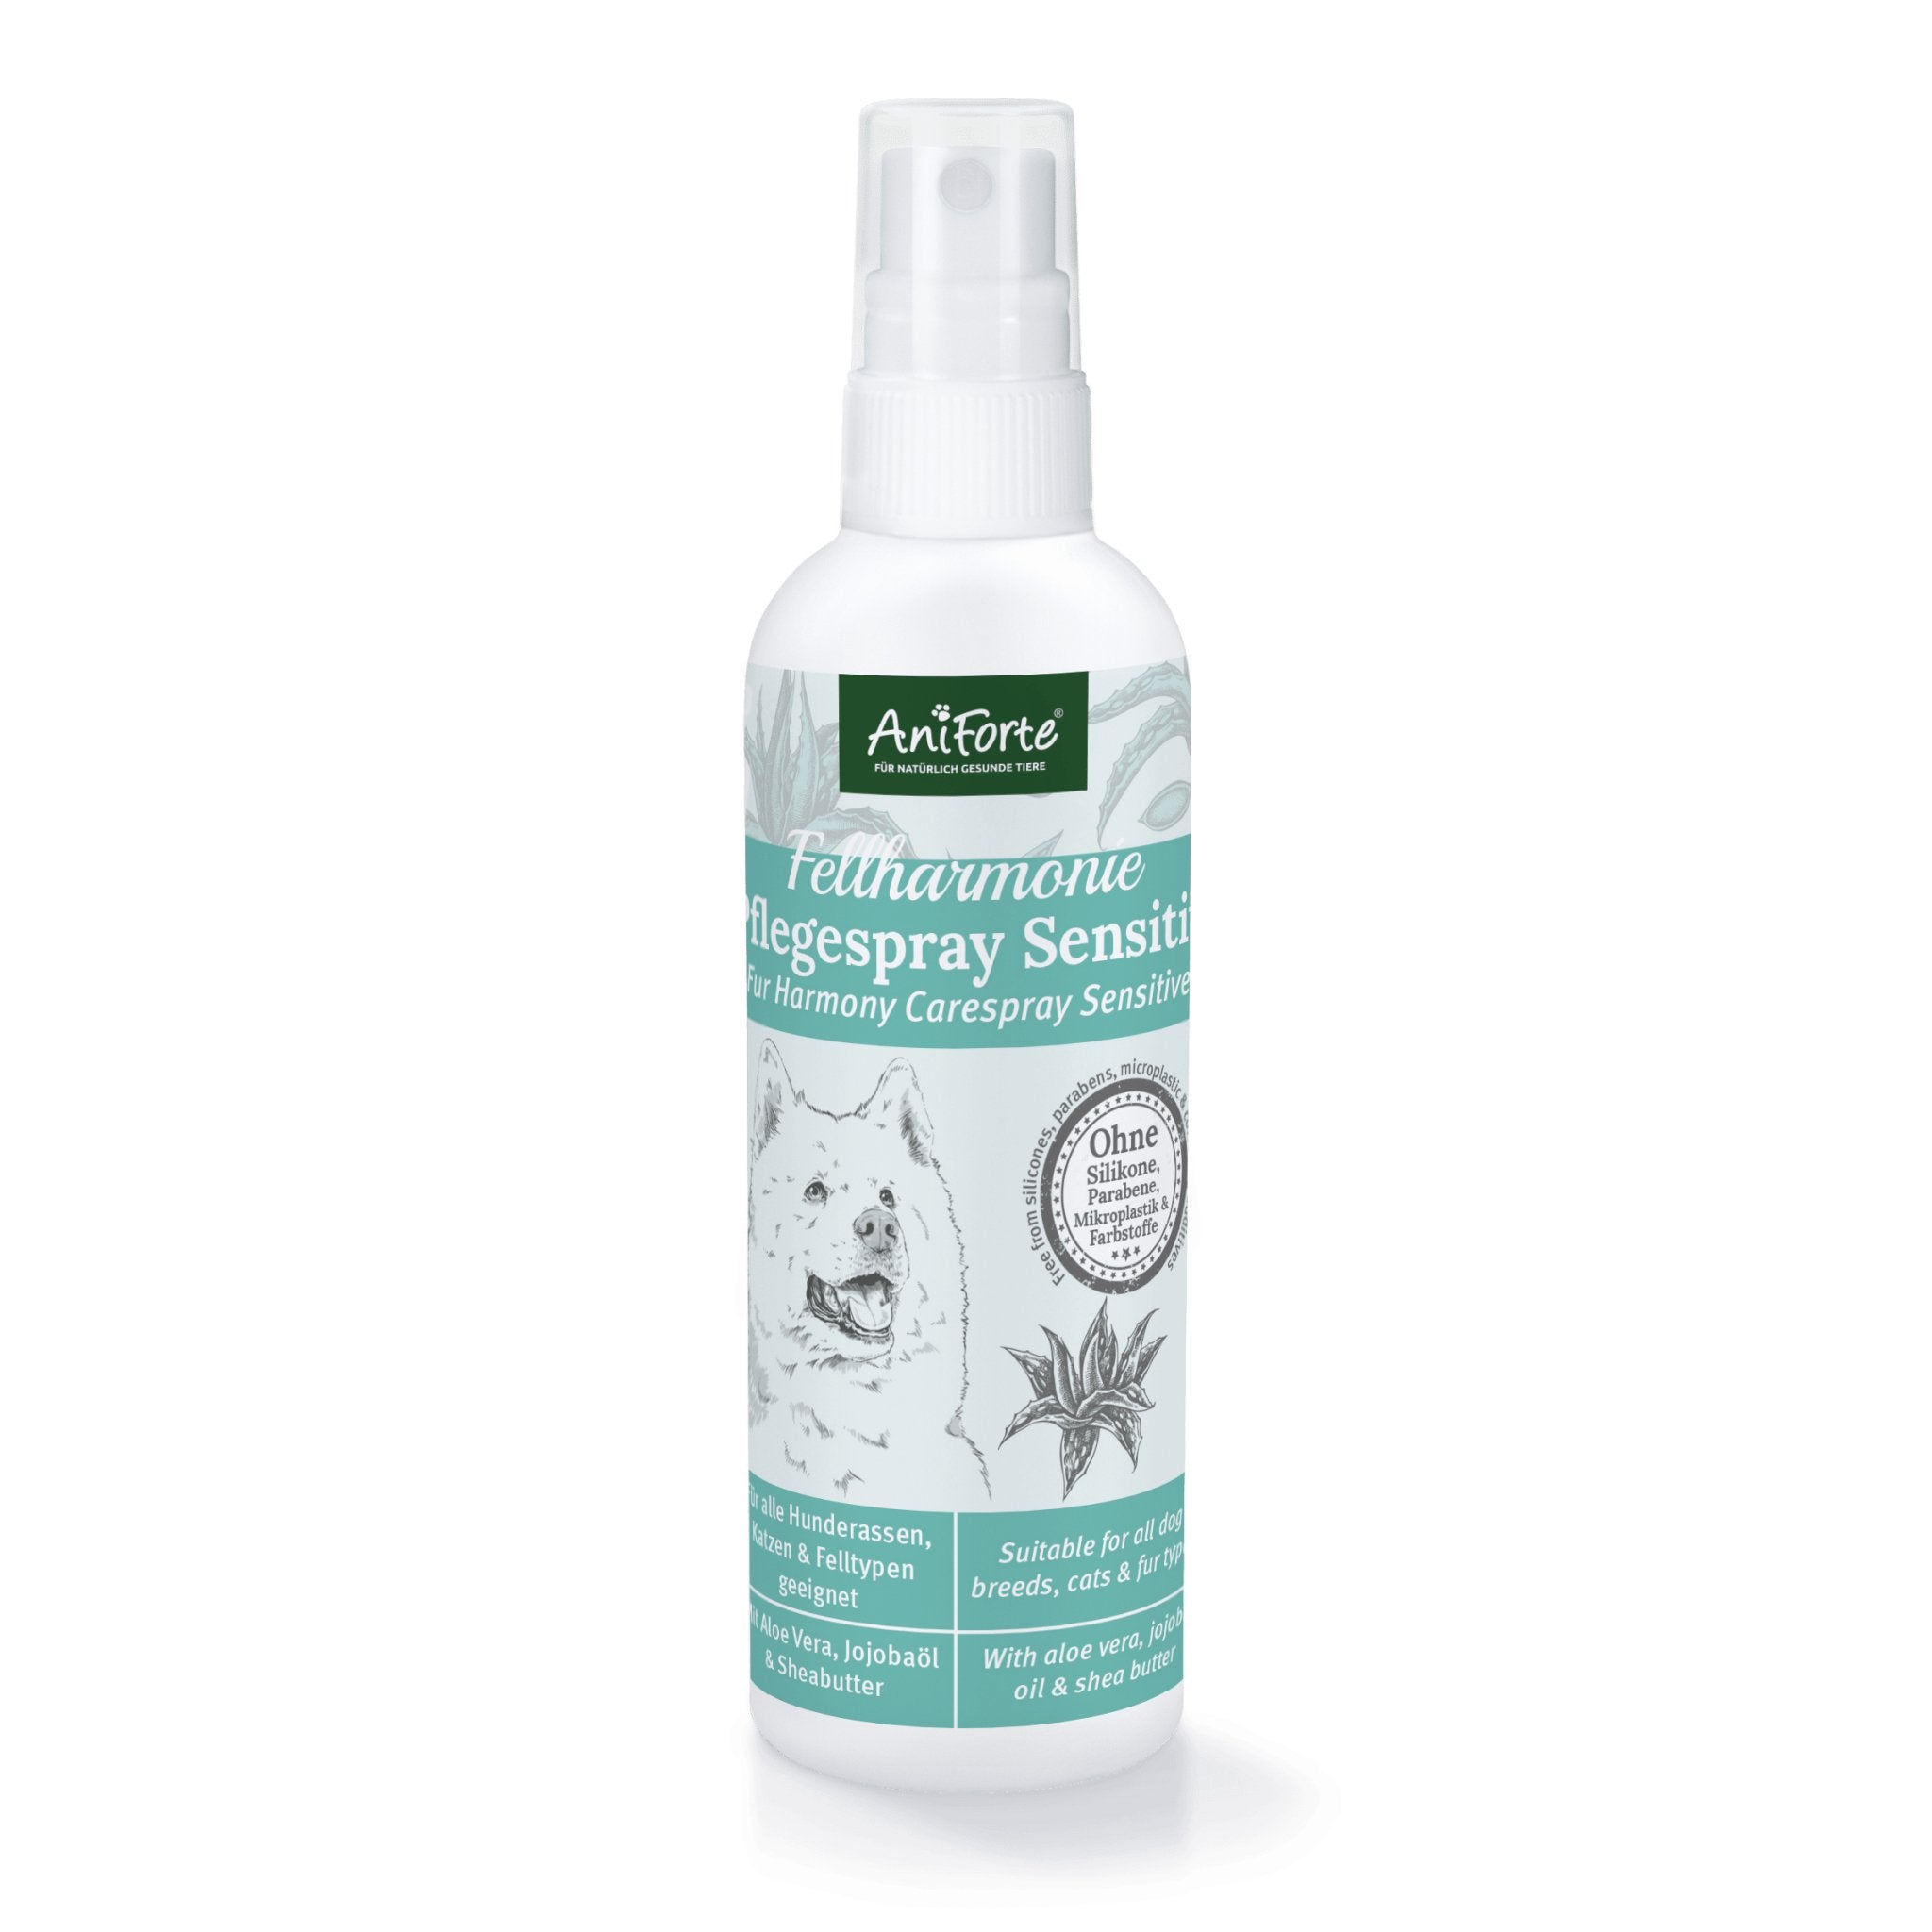 Fur Harmony Care Spray Sensitive - 200ml - AniForte UK